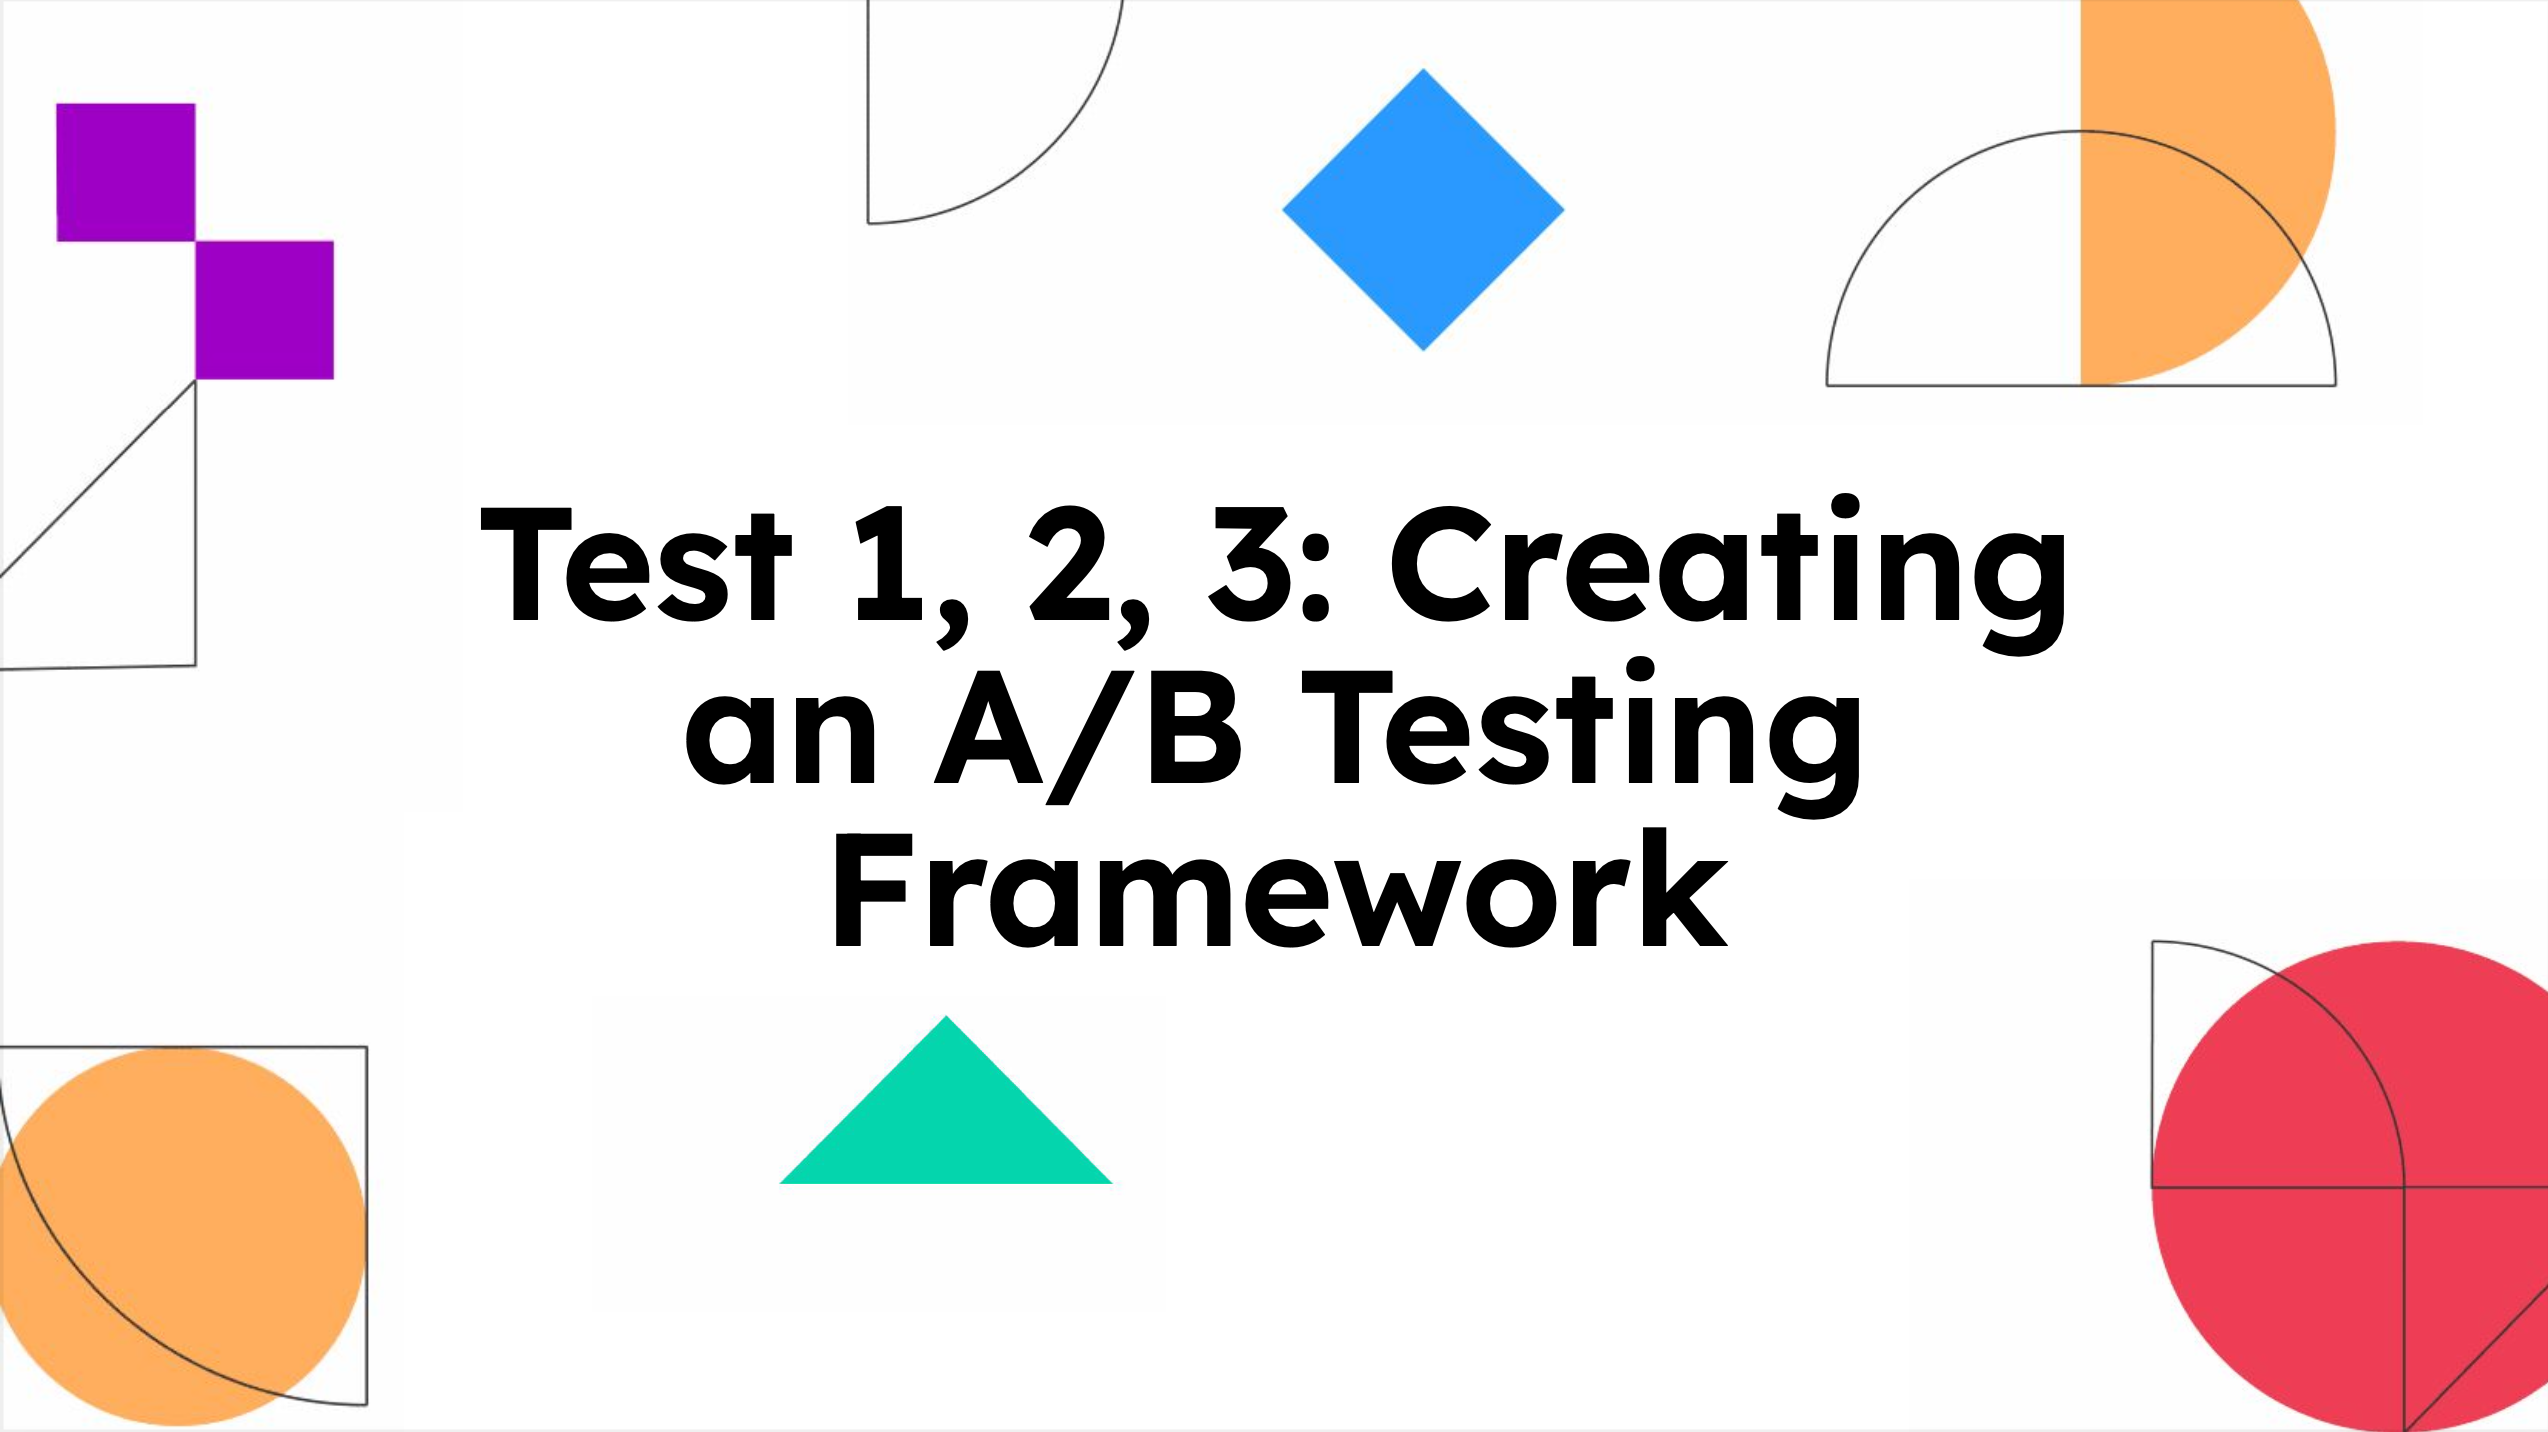 Test 1, 2, 3: Creating an A/B Testing Framework